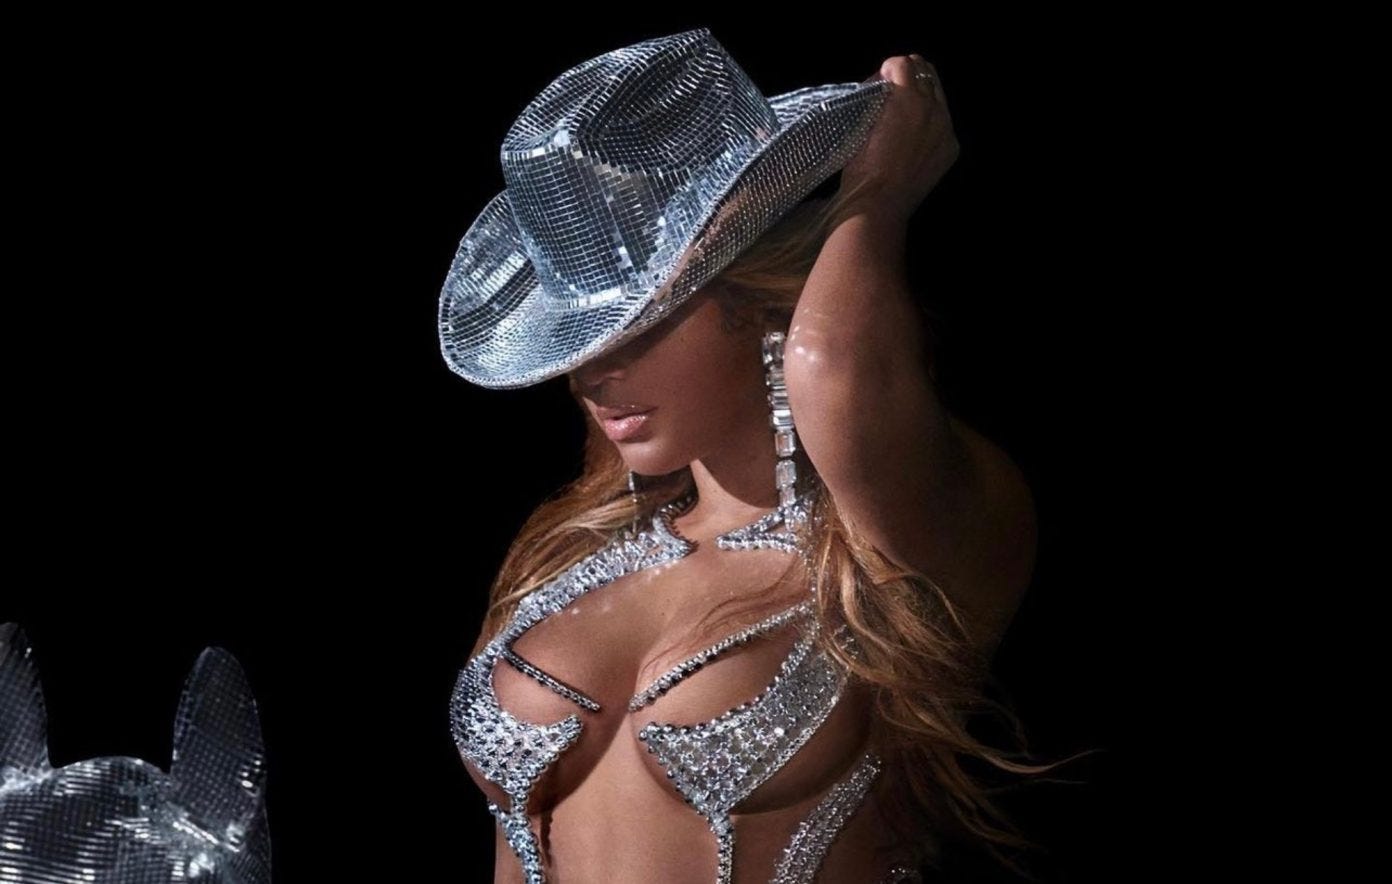 Beyoncé wearing rhinestone-studded cowgirl attire that seems elegant yet impractical.